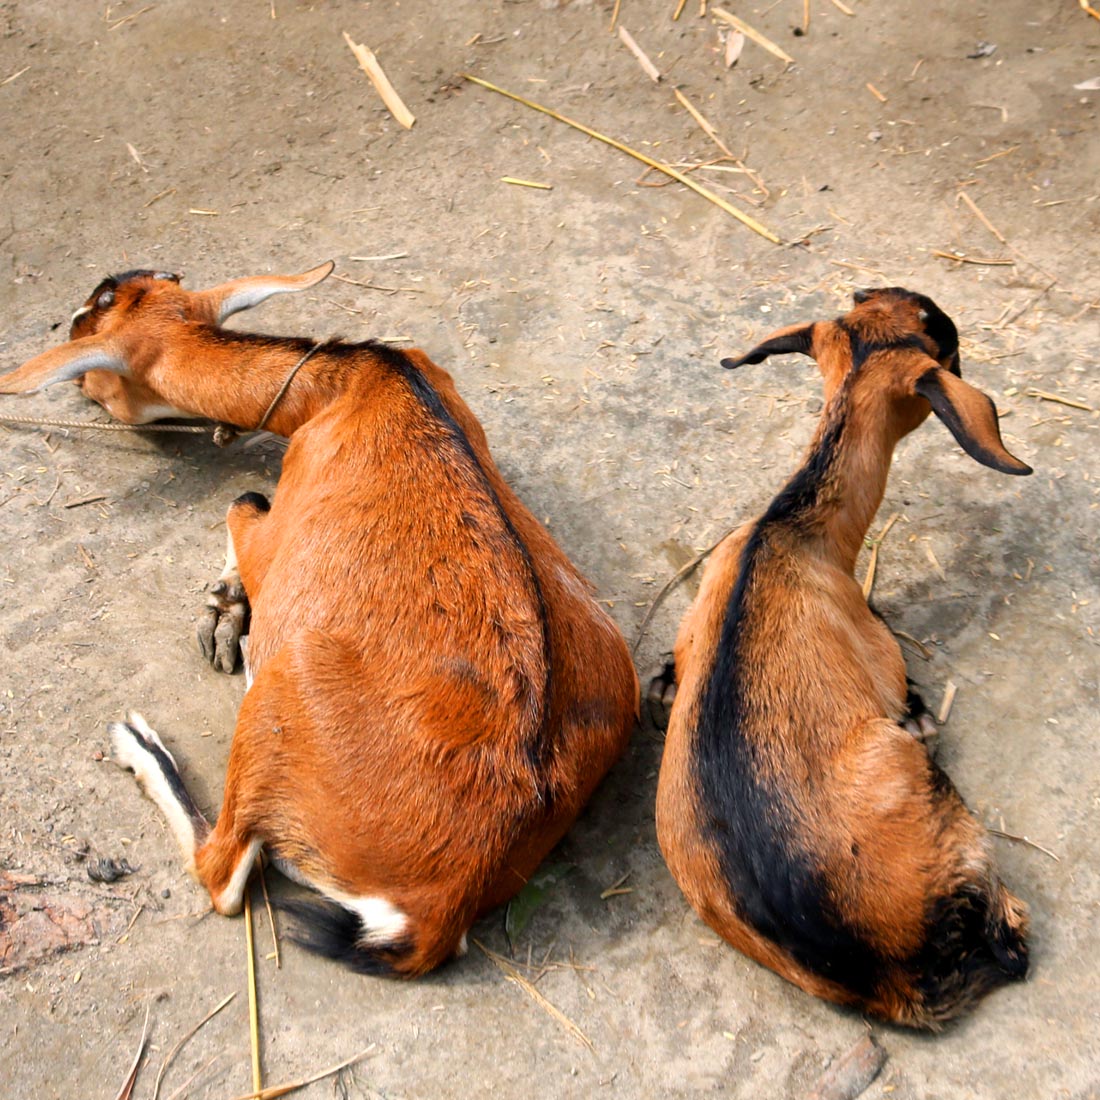 Goat Khasi photography in bangladesh preview image.